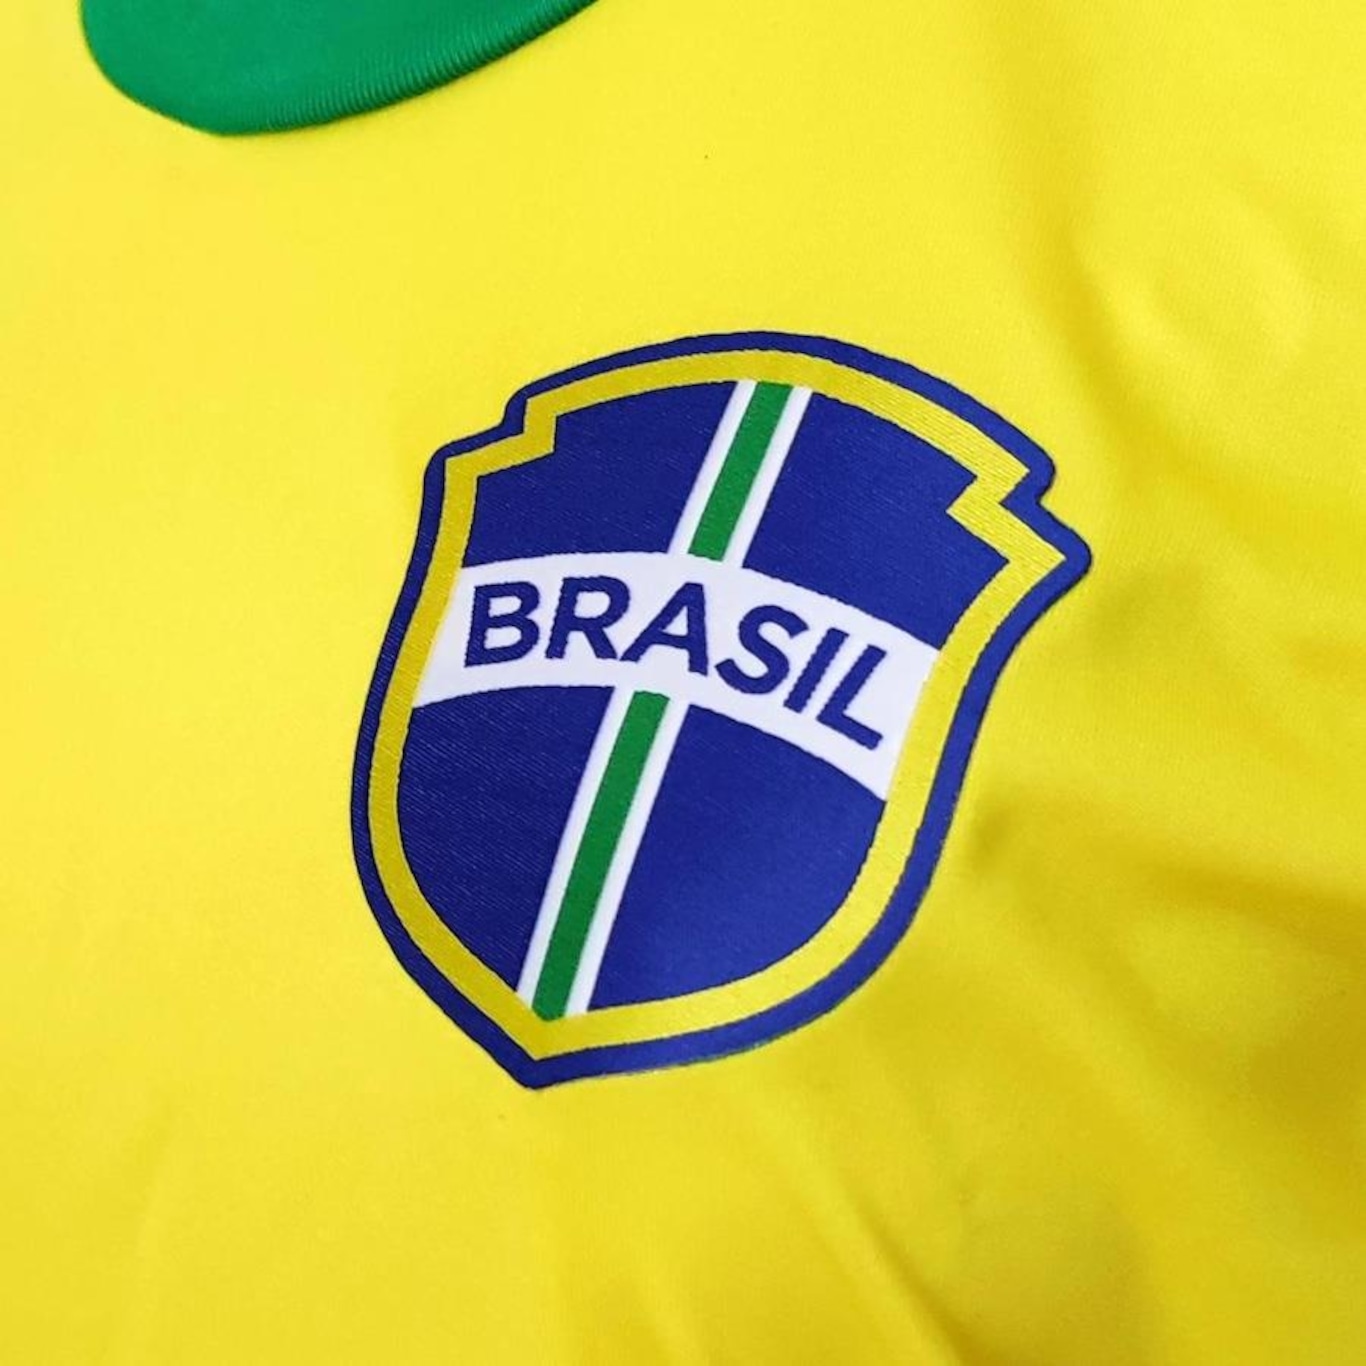 Camiseta Brasil feminina baby look - NT Sports